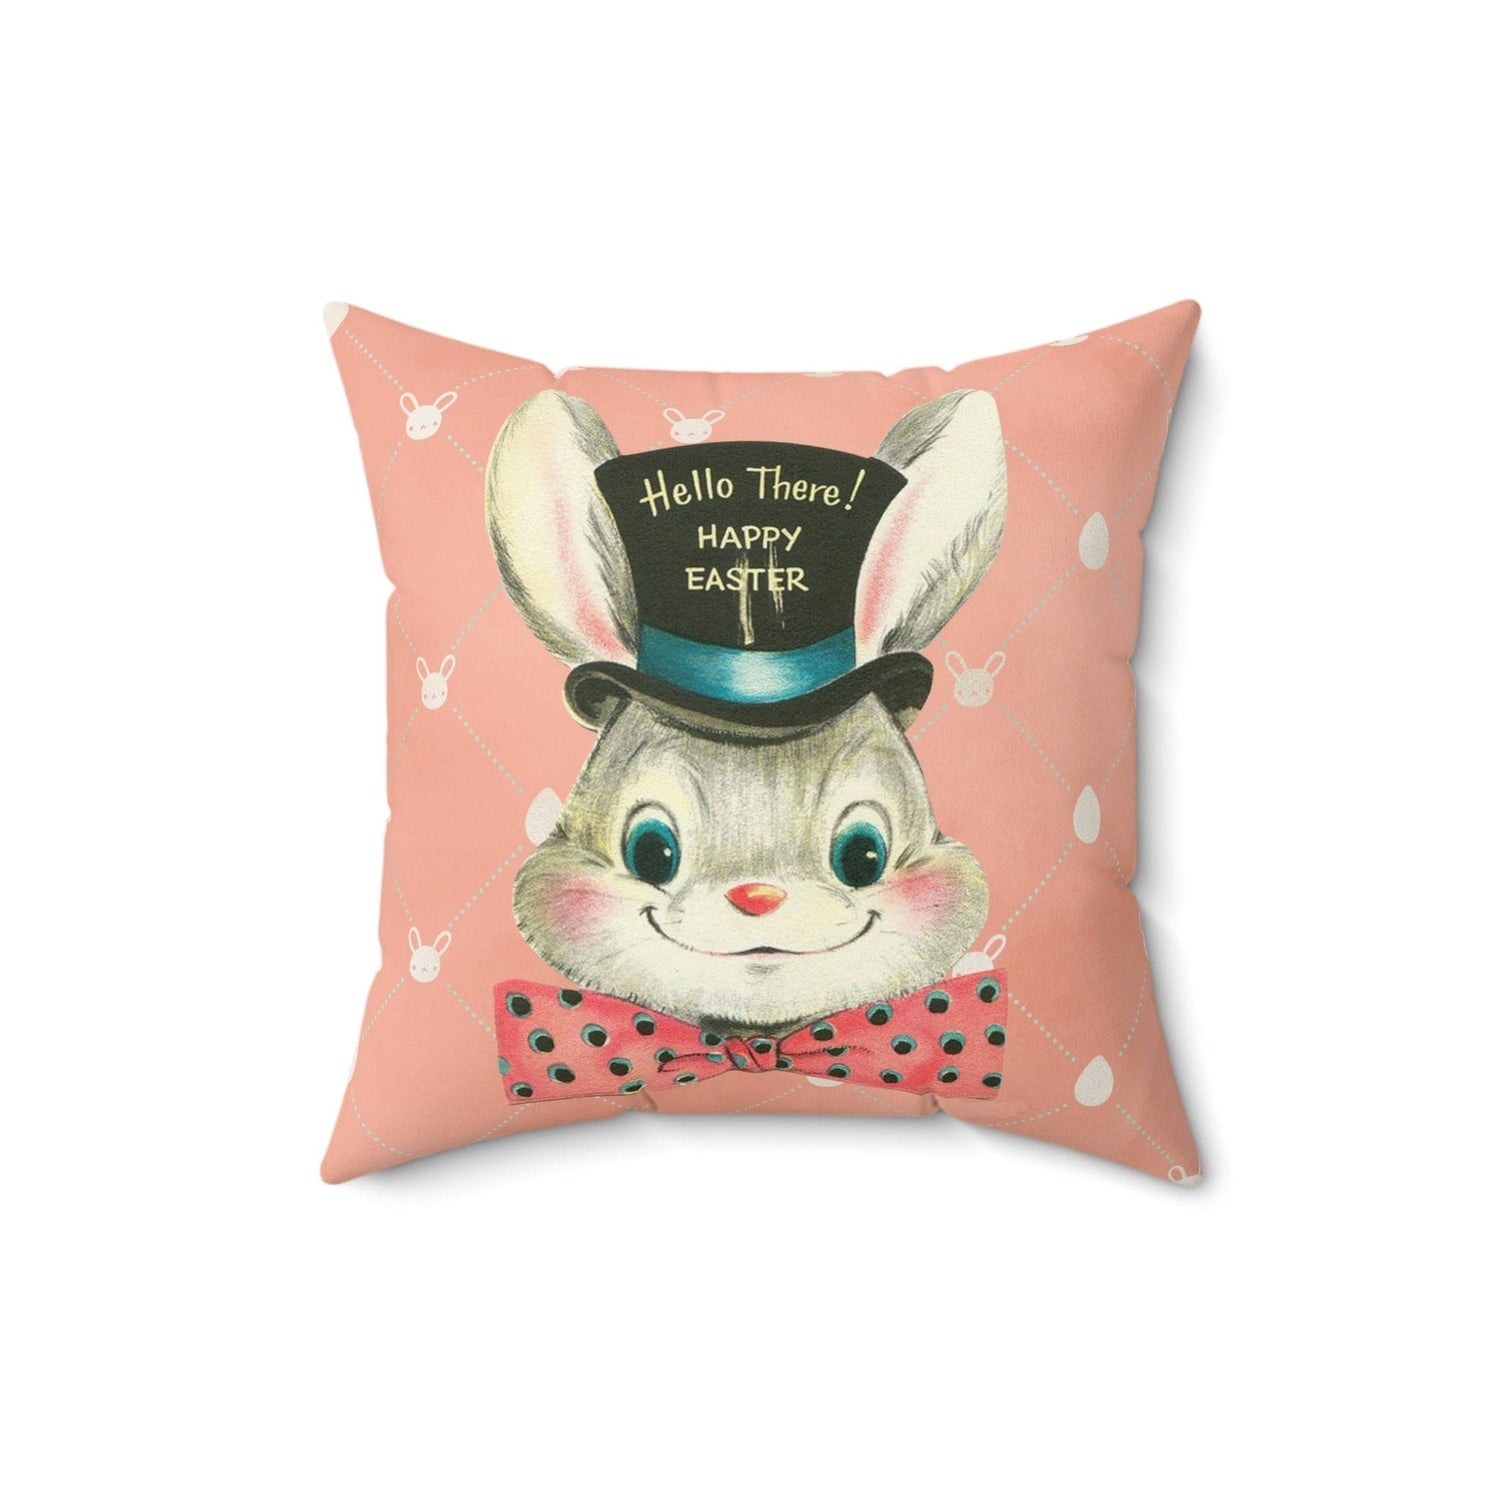 Kate McEnroe New York Retro Kitschy Vintage Easter Card Inspired Art Throw Pillow CoverThrow Pillow Covers27371922481833803742